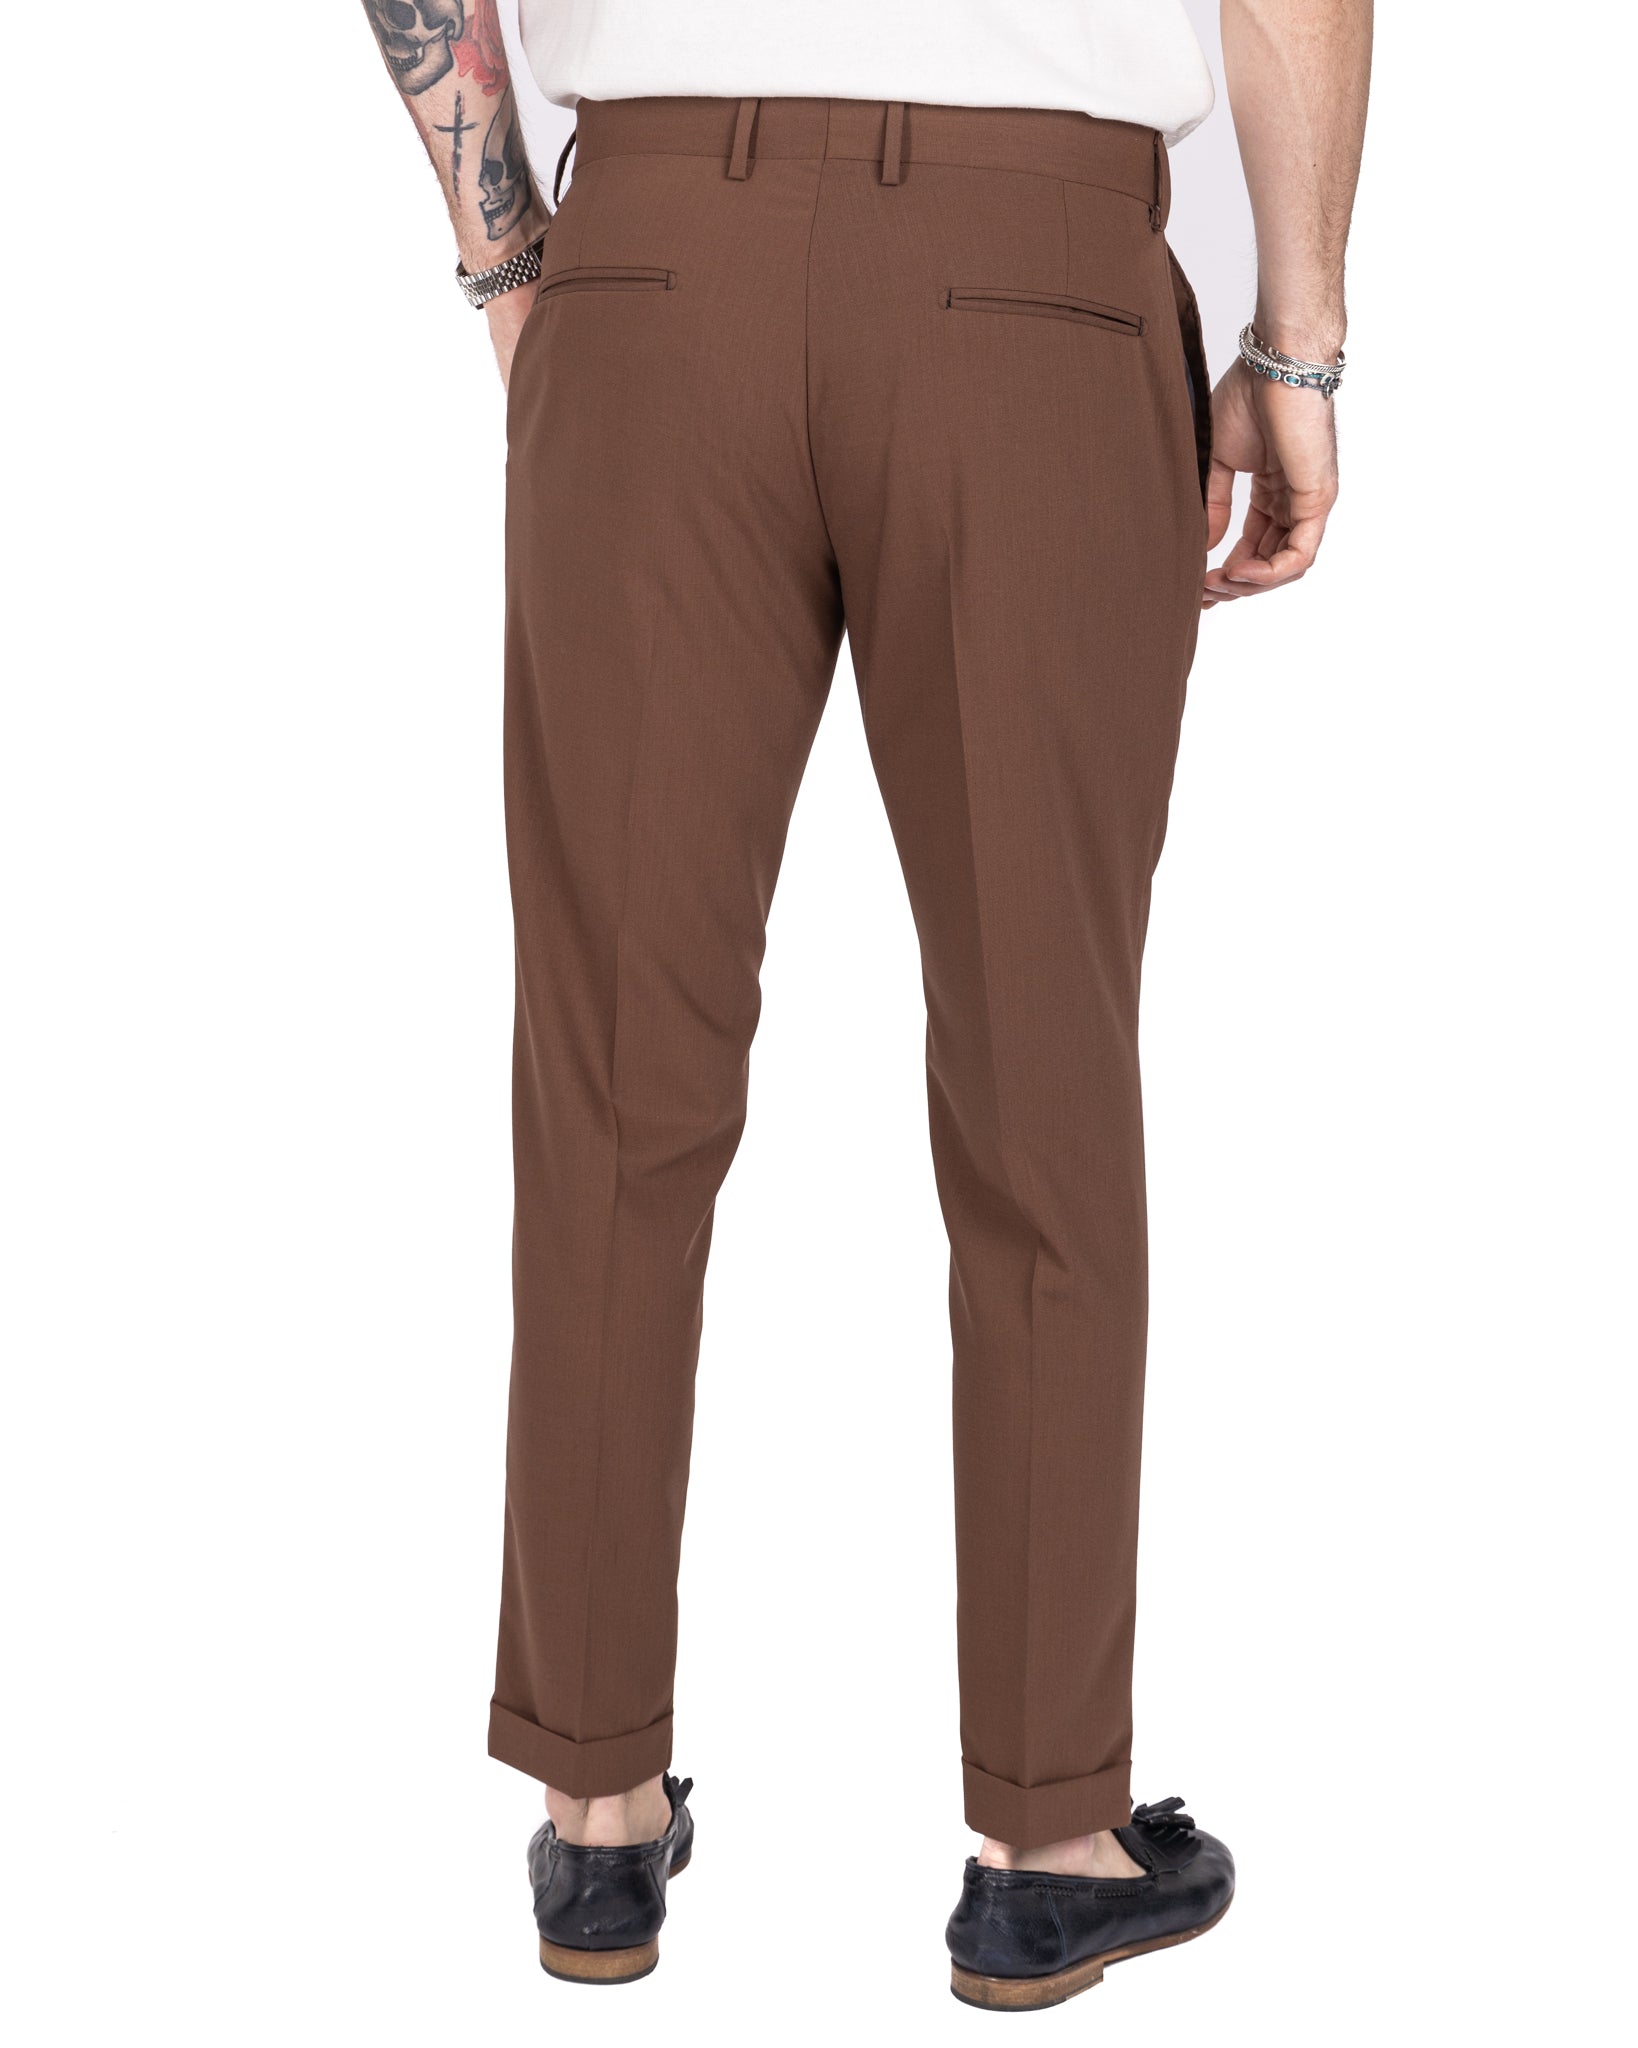 Milano - dark brown basic trousers